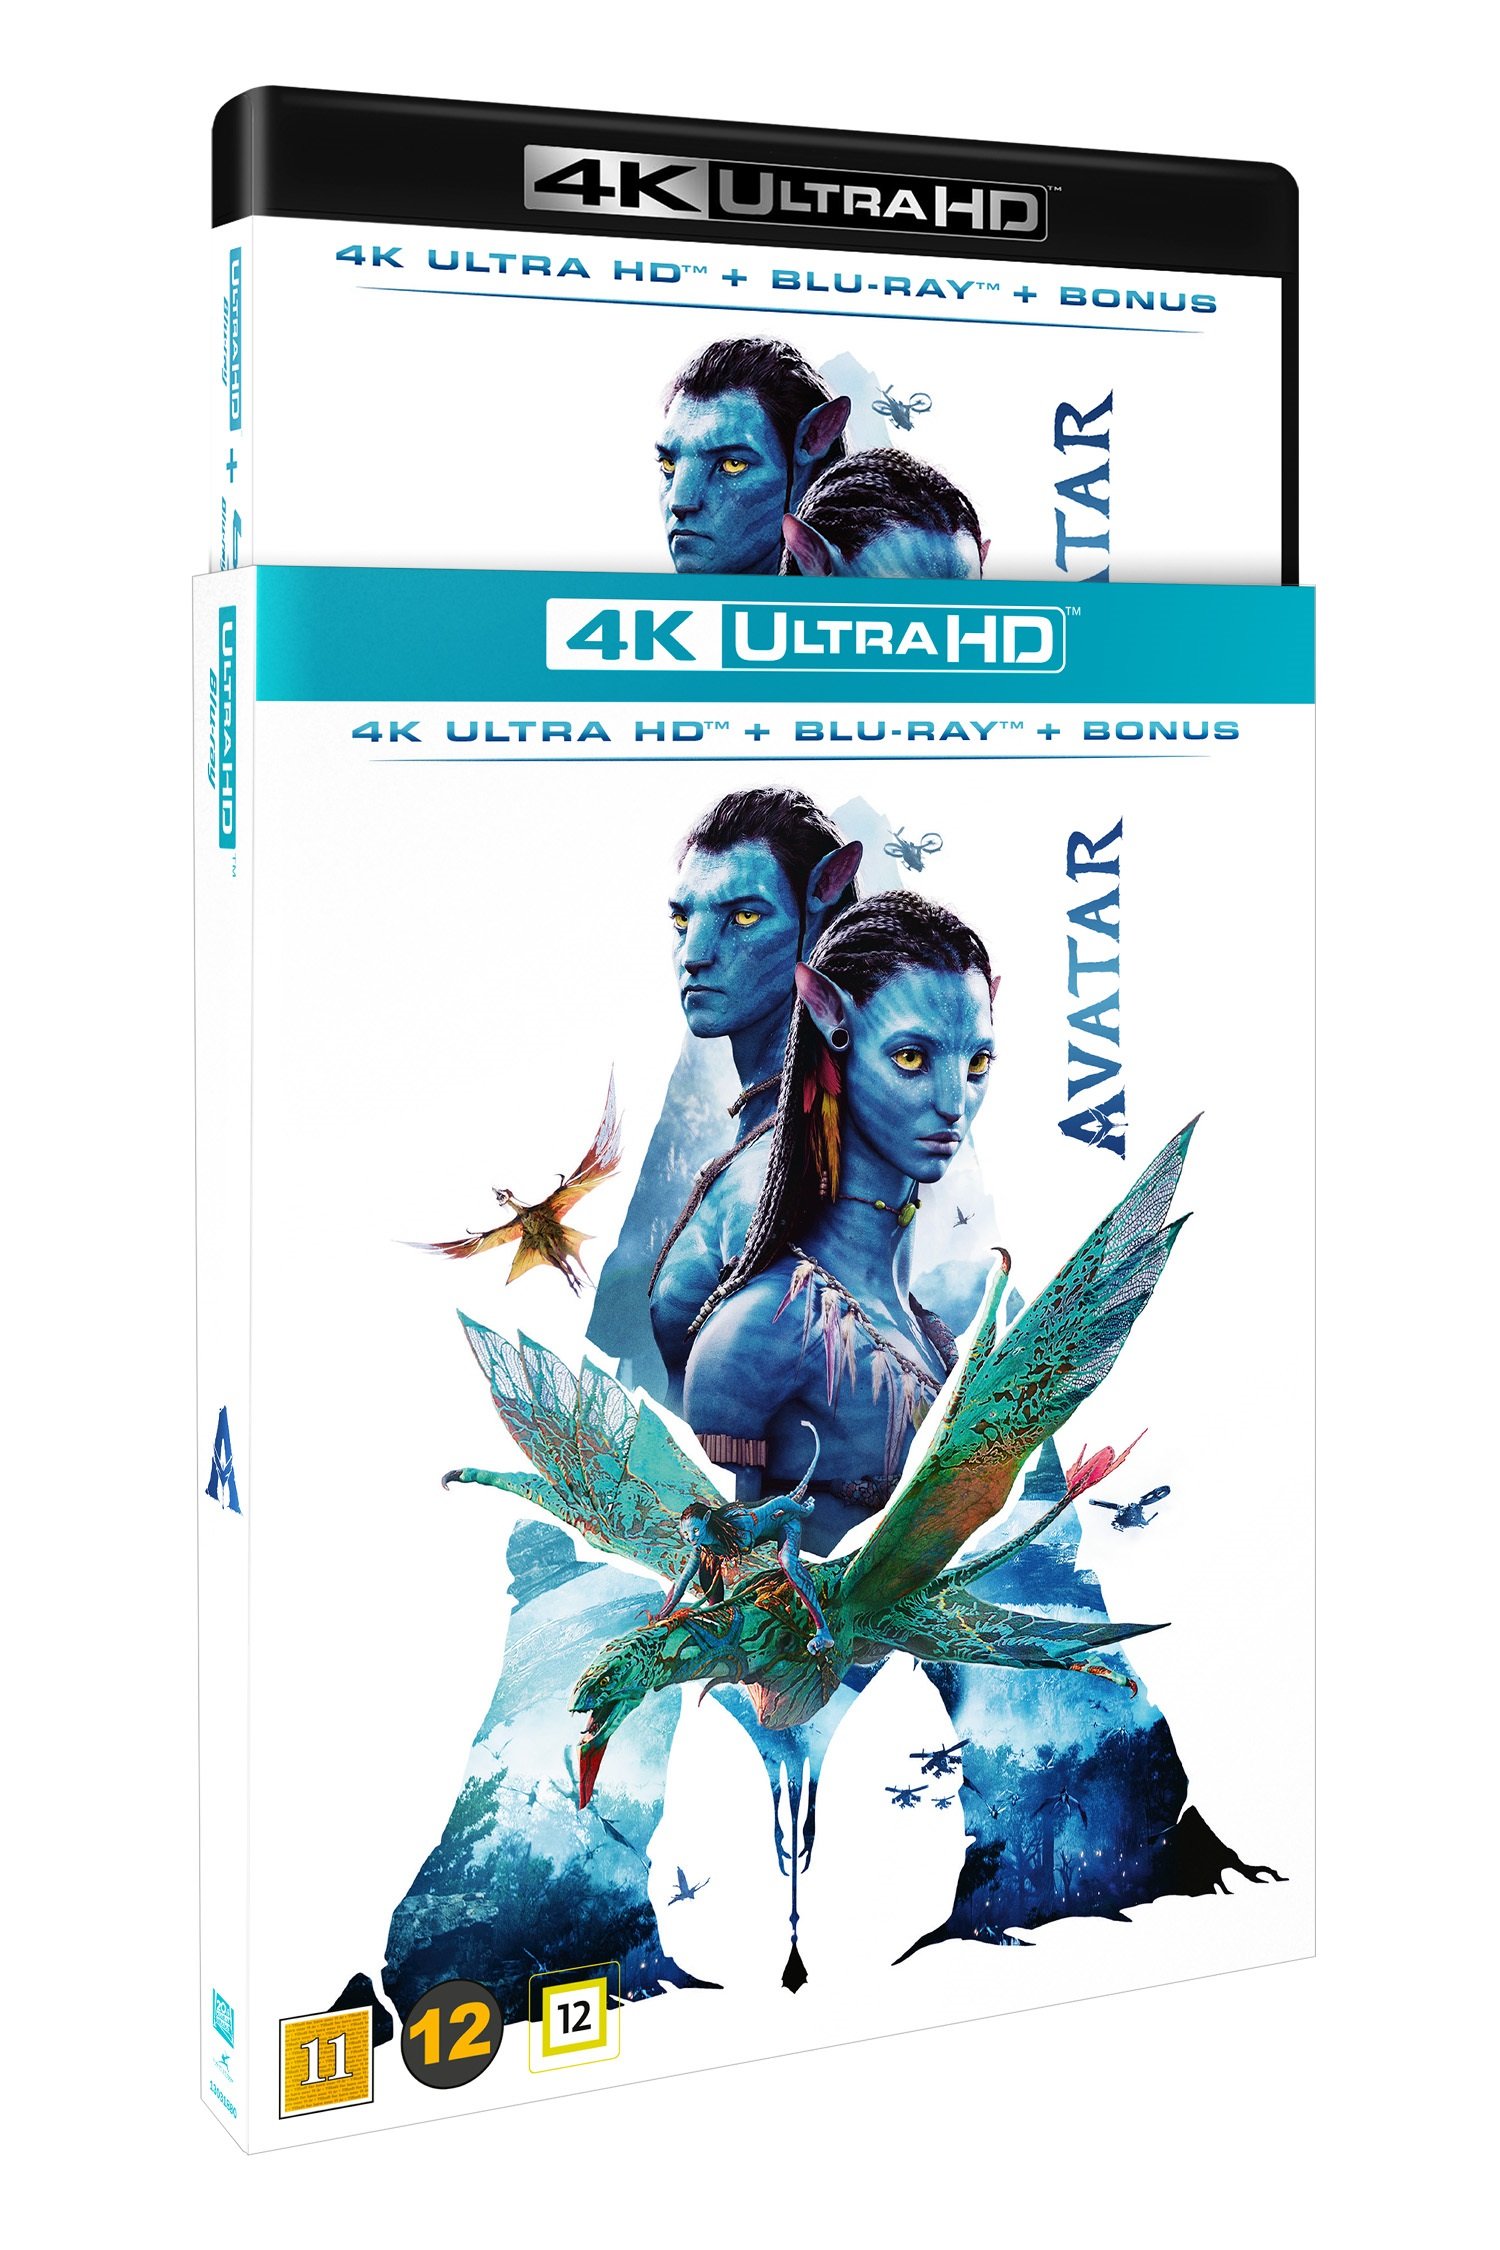 Amazoncom Avatar Bluray 3D  Bluray DVD Combo Pack  Sam  Worthington Zoe Saldana Sigourney Weaver Stephen Lang Michelle  Rodriguez Giovanni Ribisi James Cameron Movies  TV